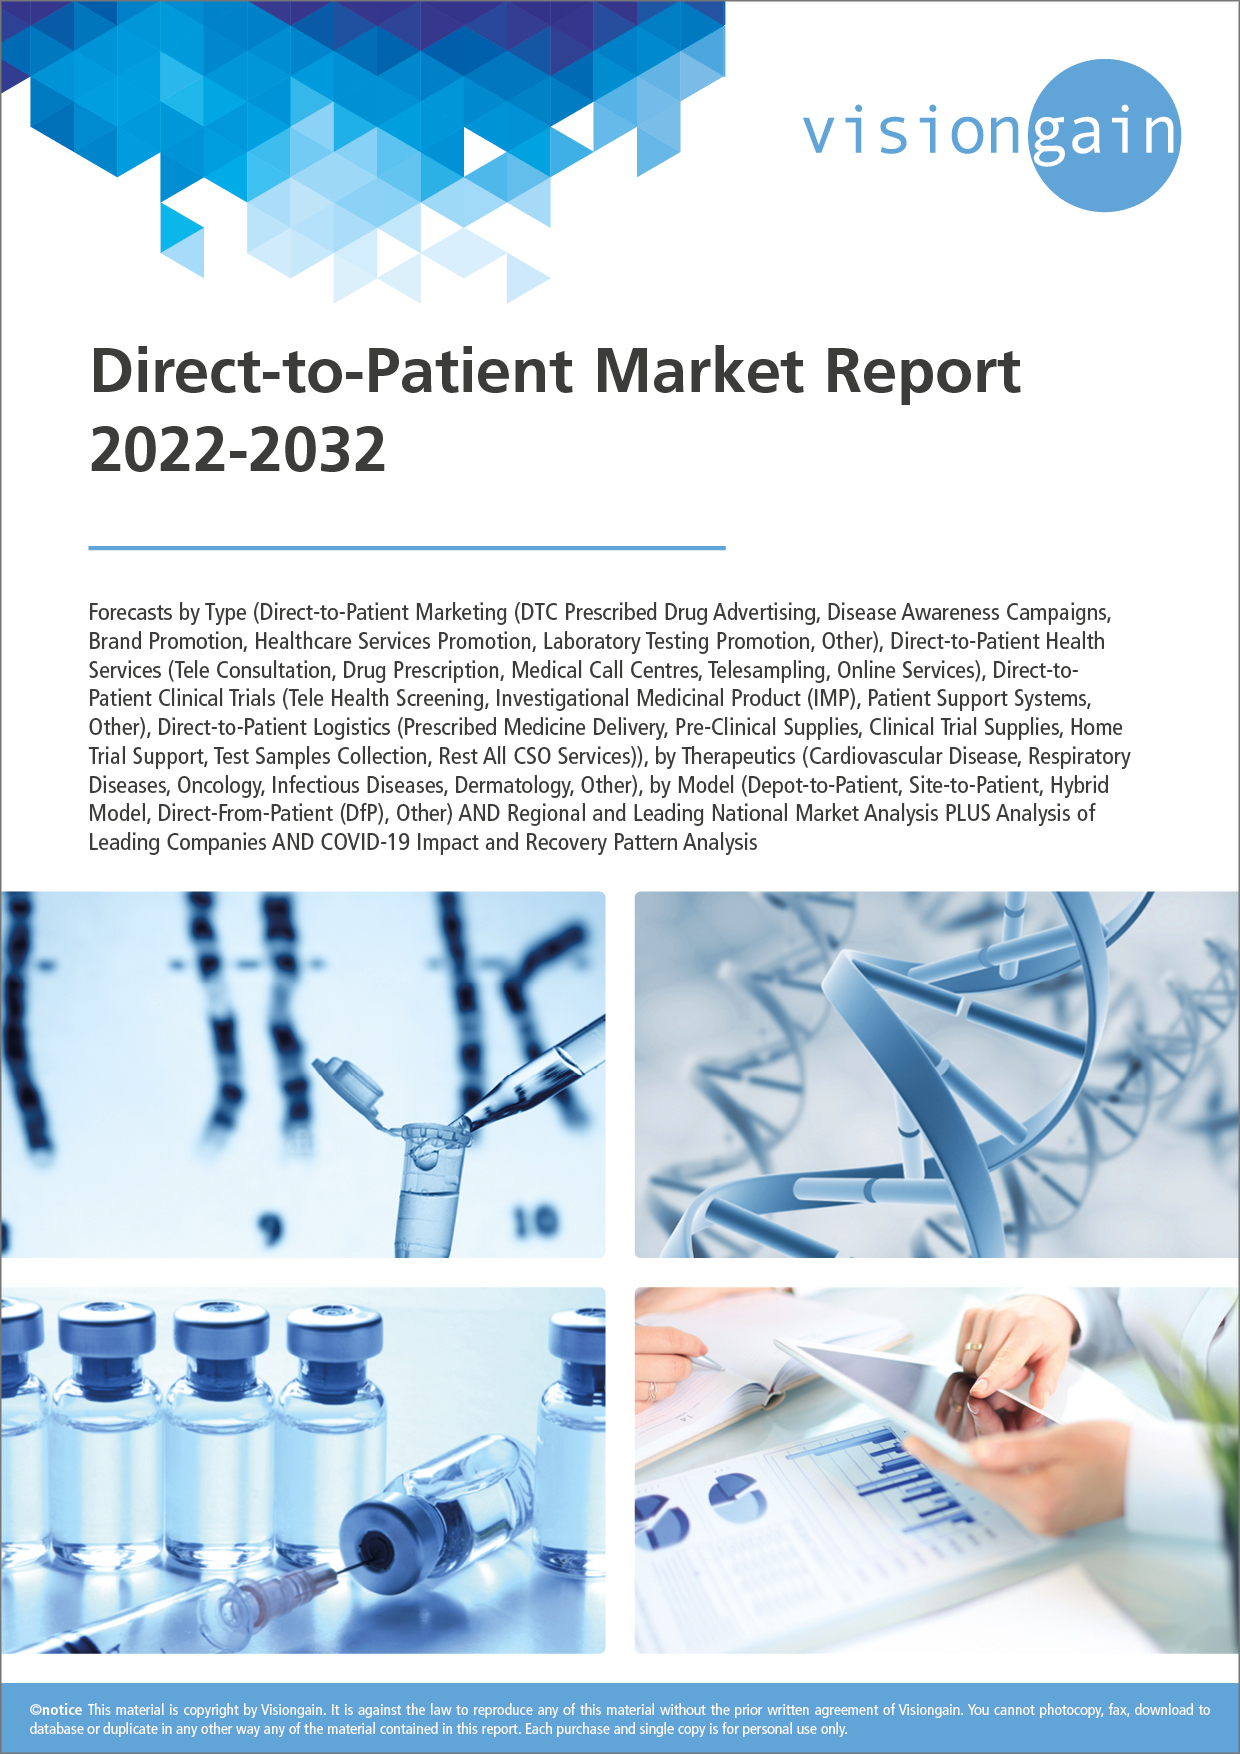 Direct-to-Patient Market Report 2022-2032